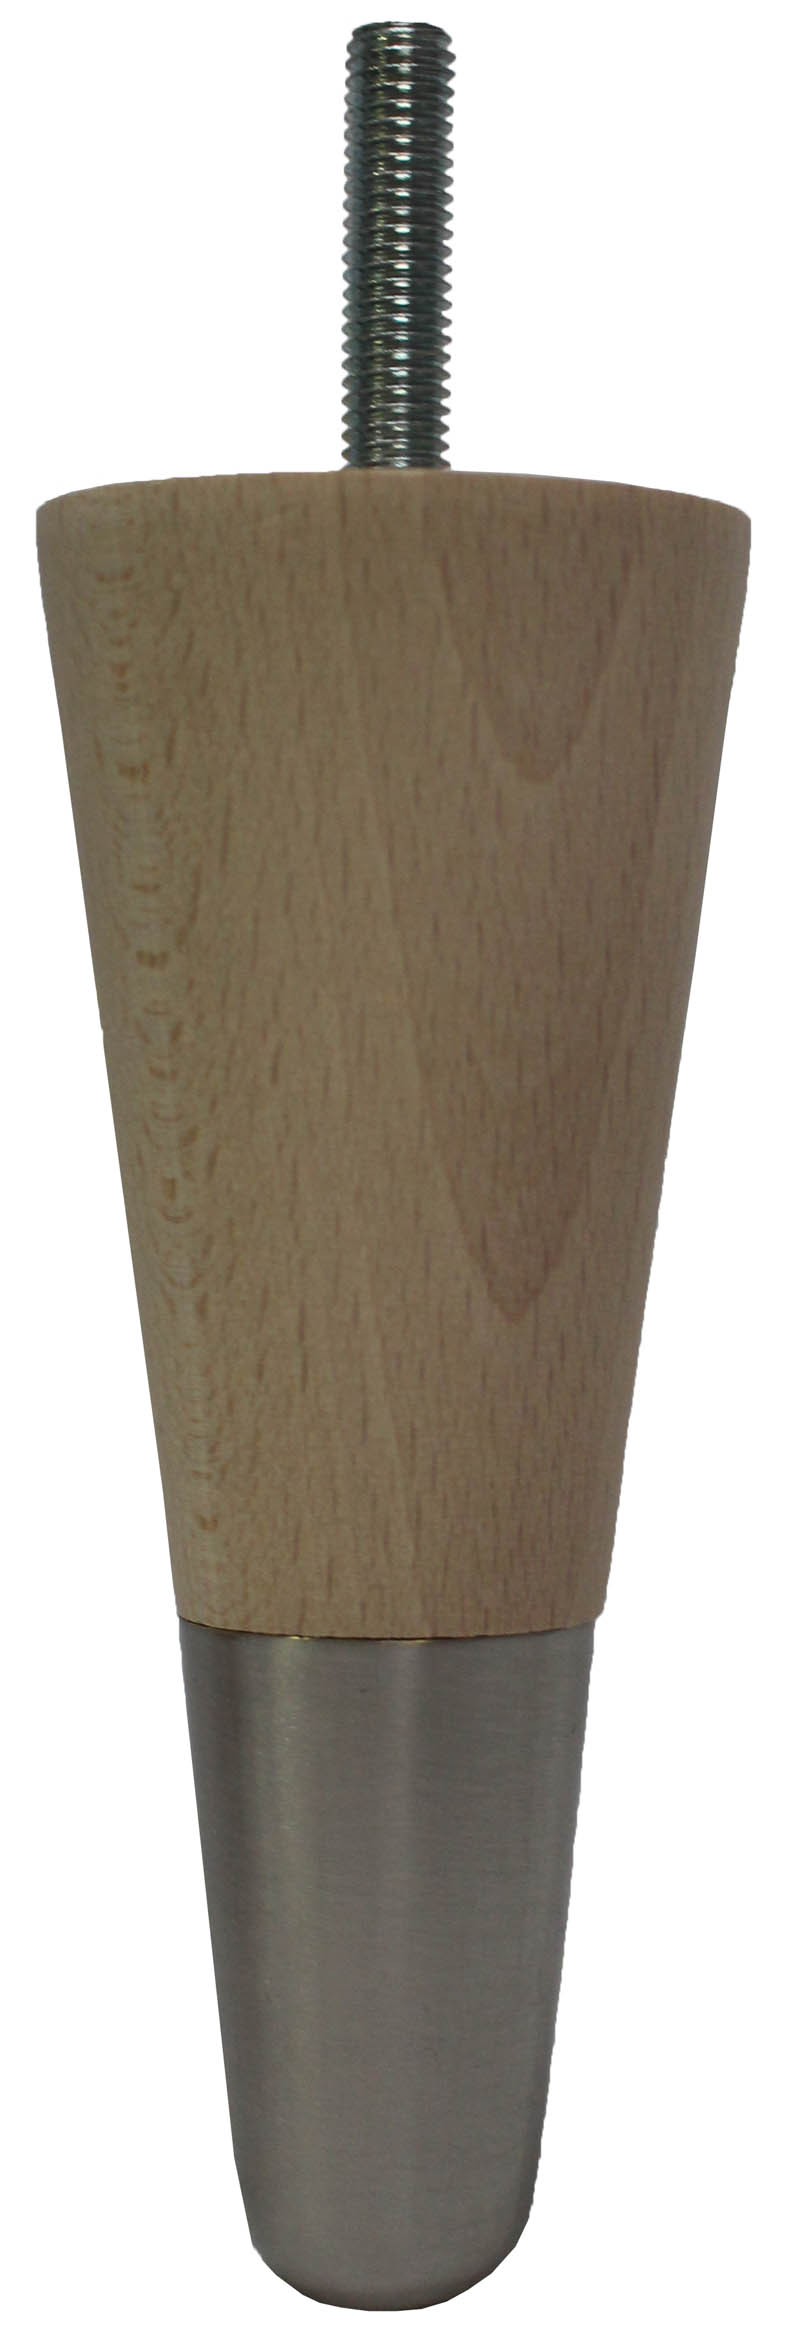 Azalea Tapered Furniture Legs - Raw Finish - Brushed Chrome Slipper Cups - Set of 4